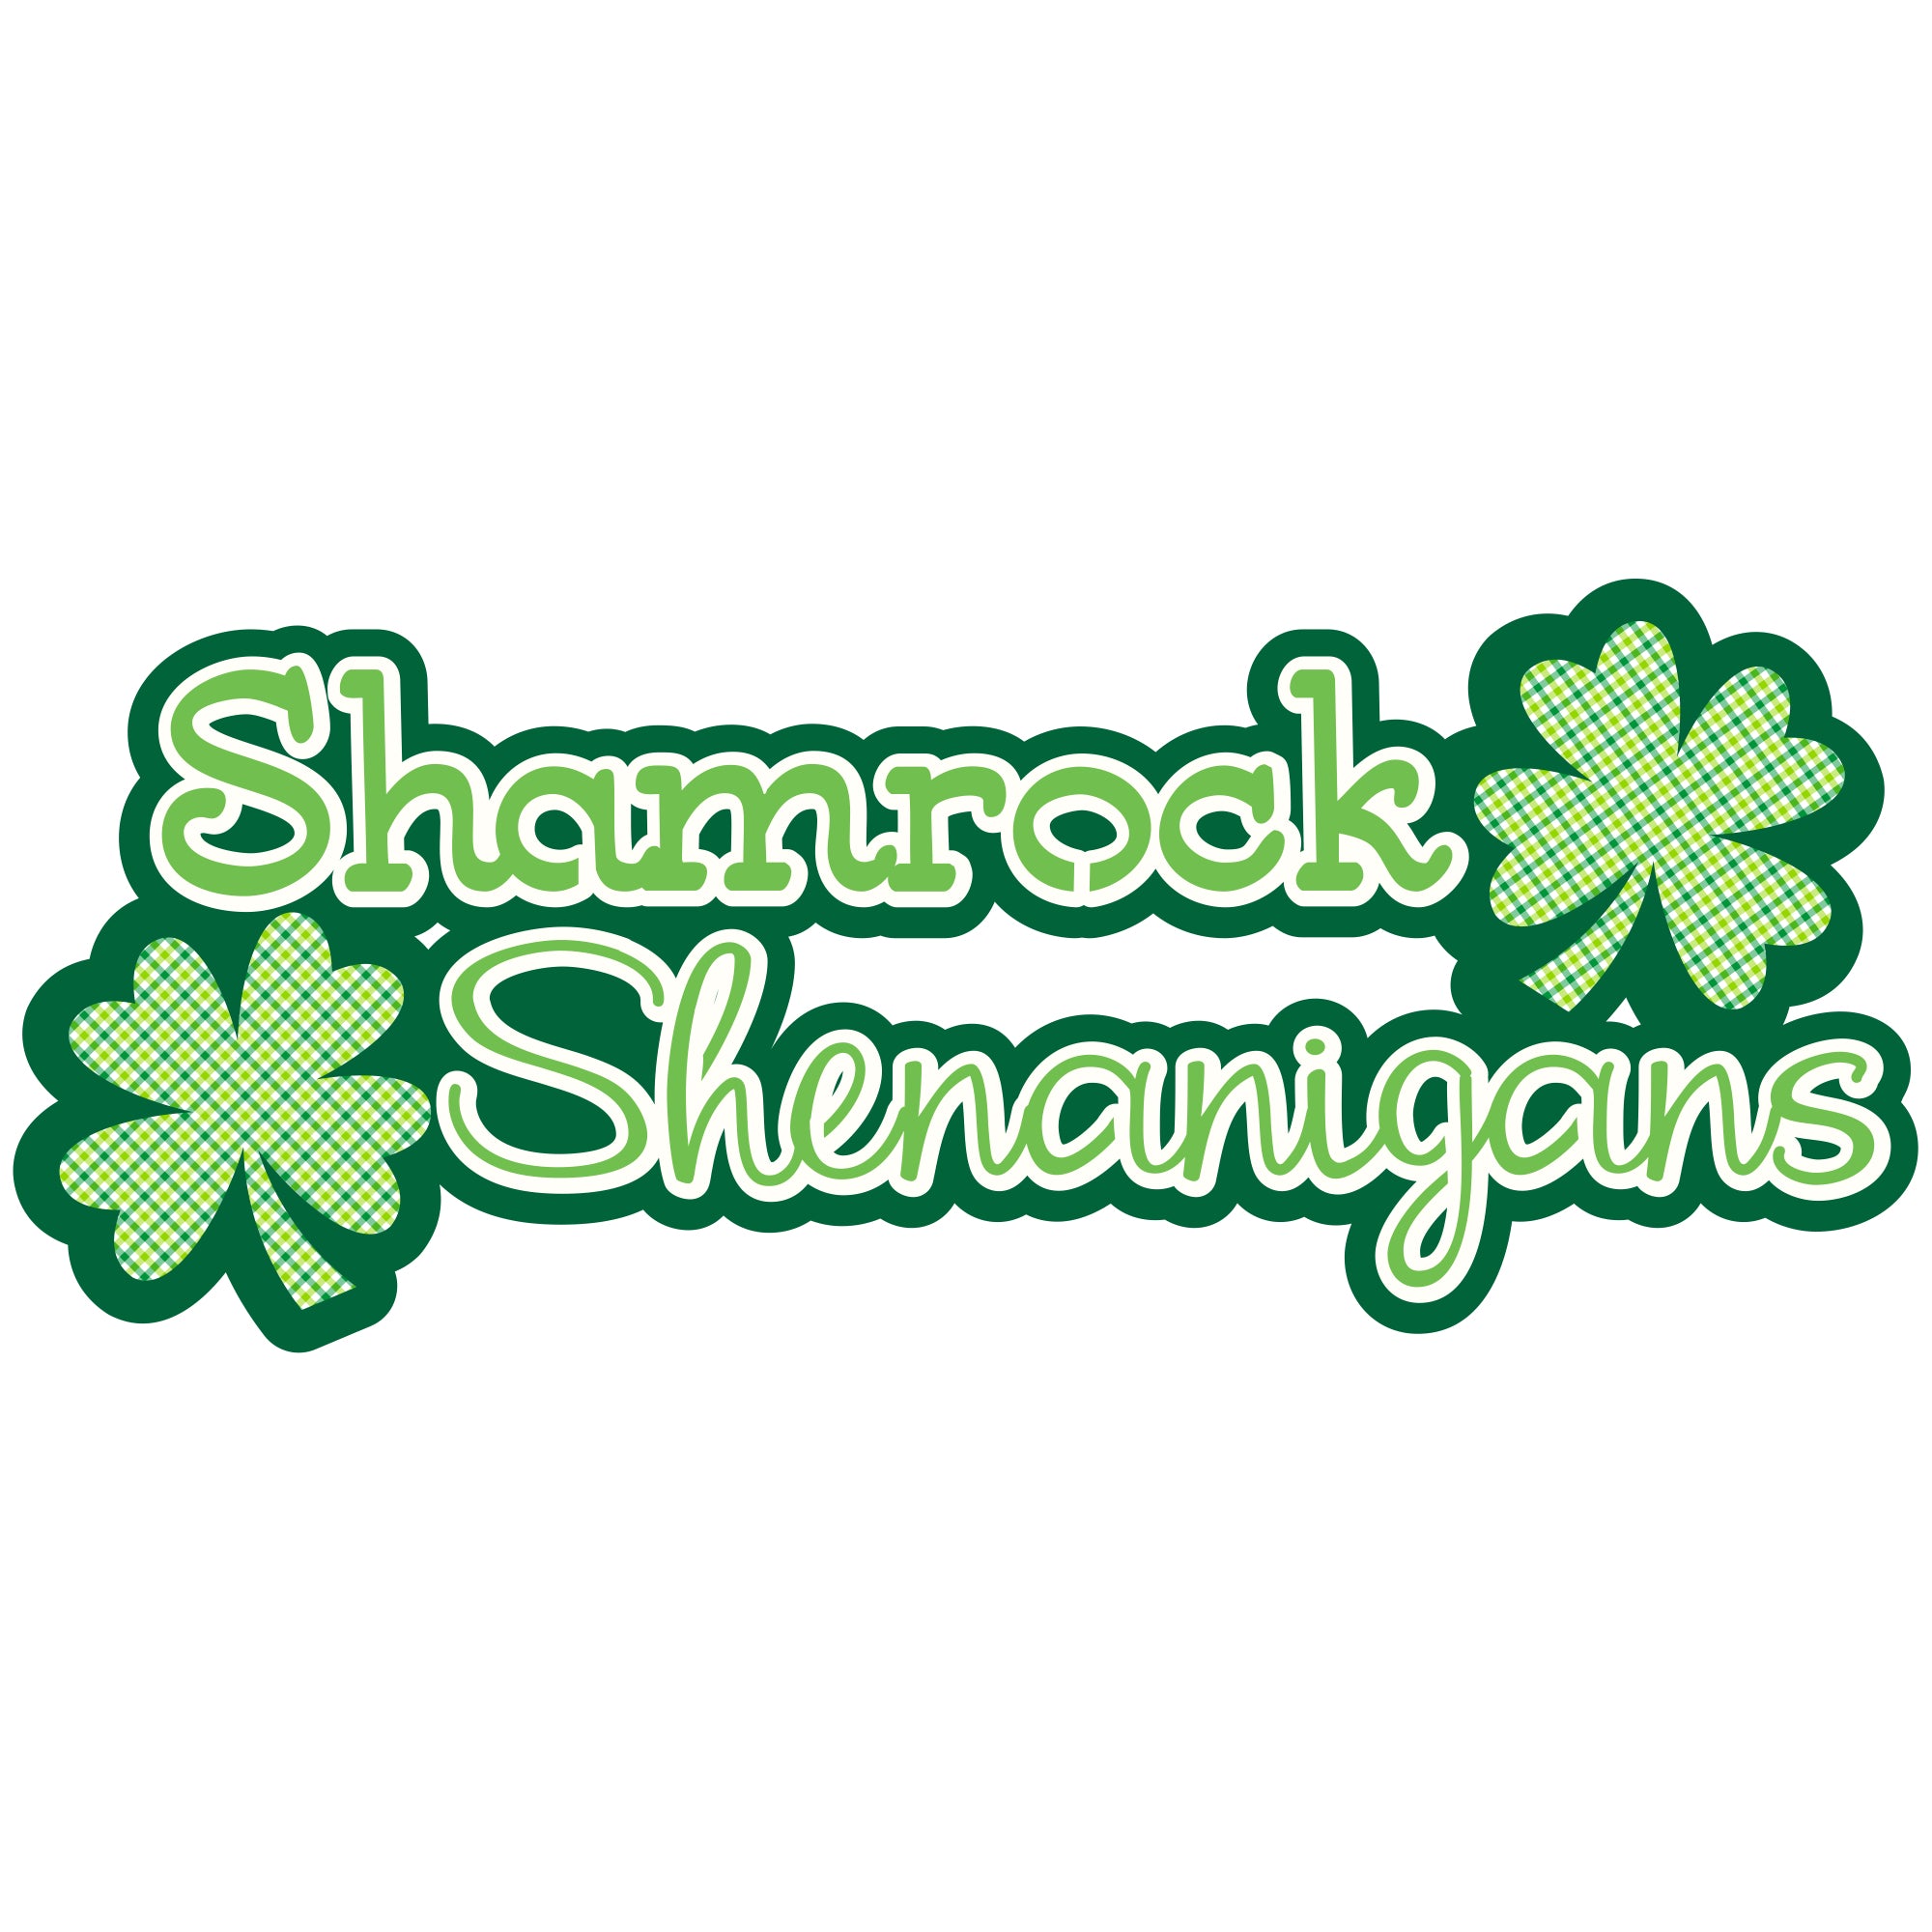 St. Patrick's Day Collection Shamrock Shenanigans 6.5 x 2.75 Fully-Assembled Laser Cut by SSC Laser Designs